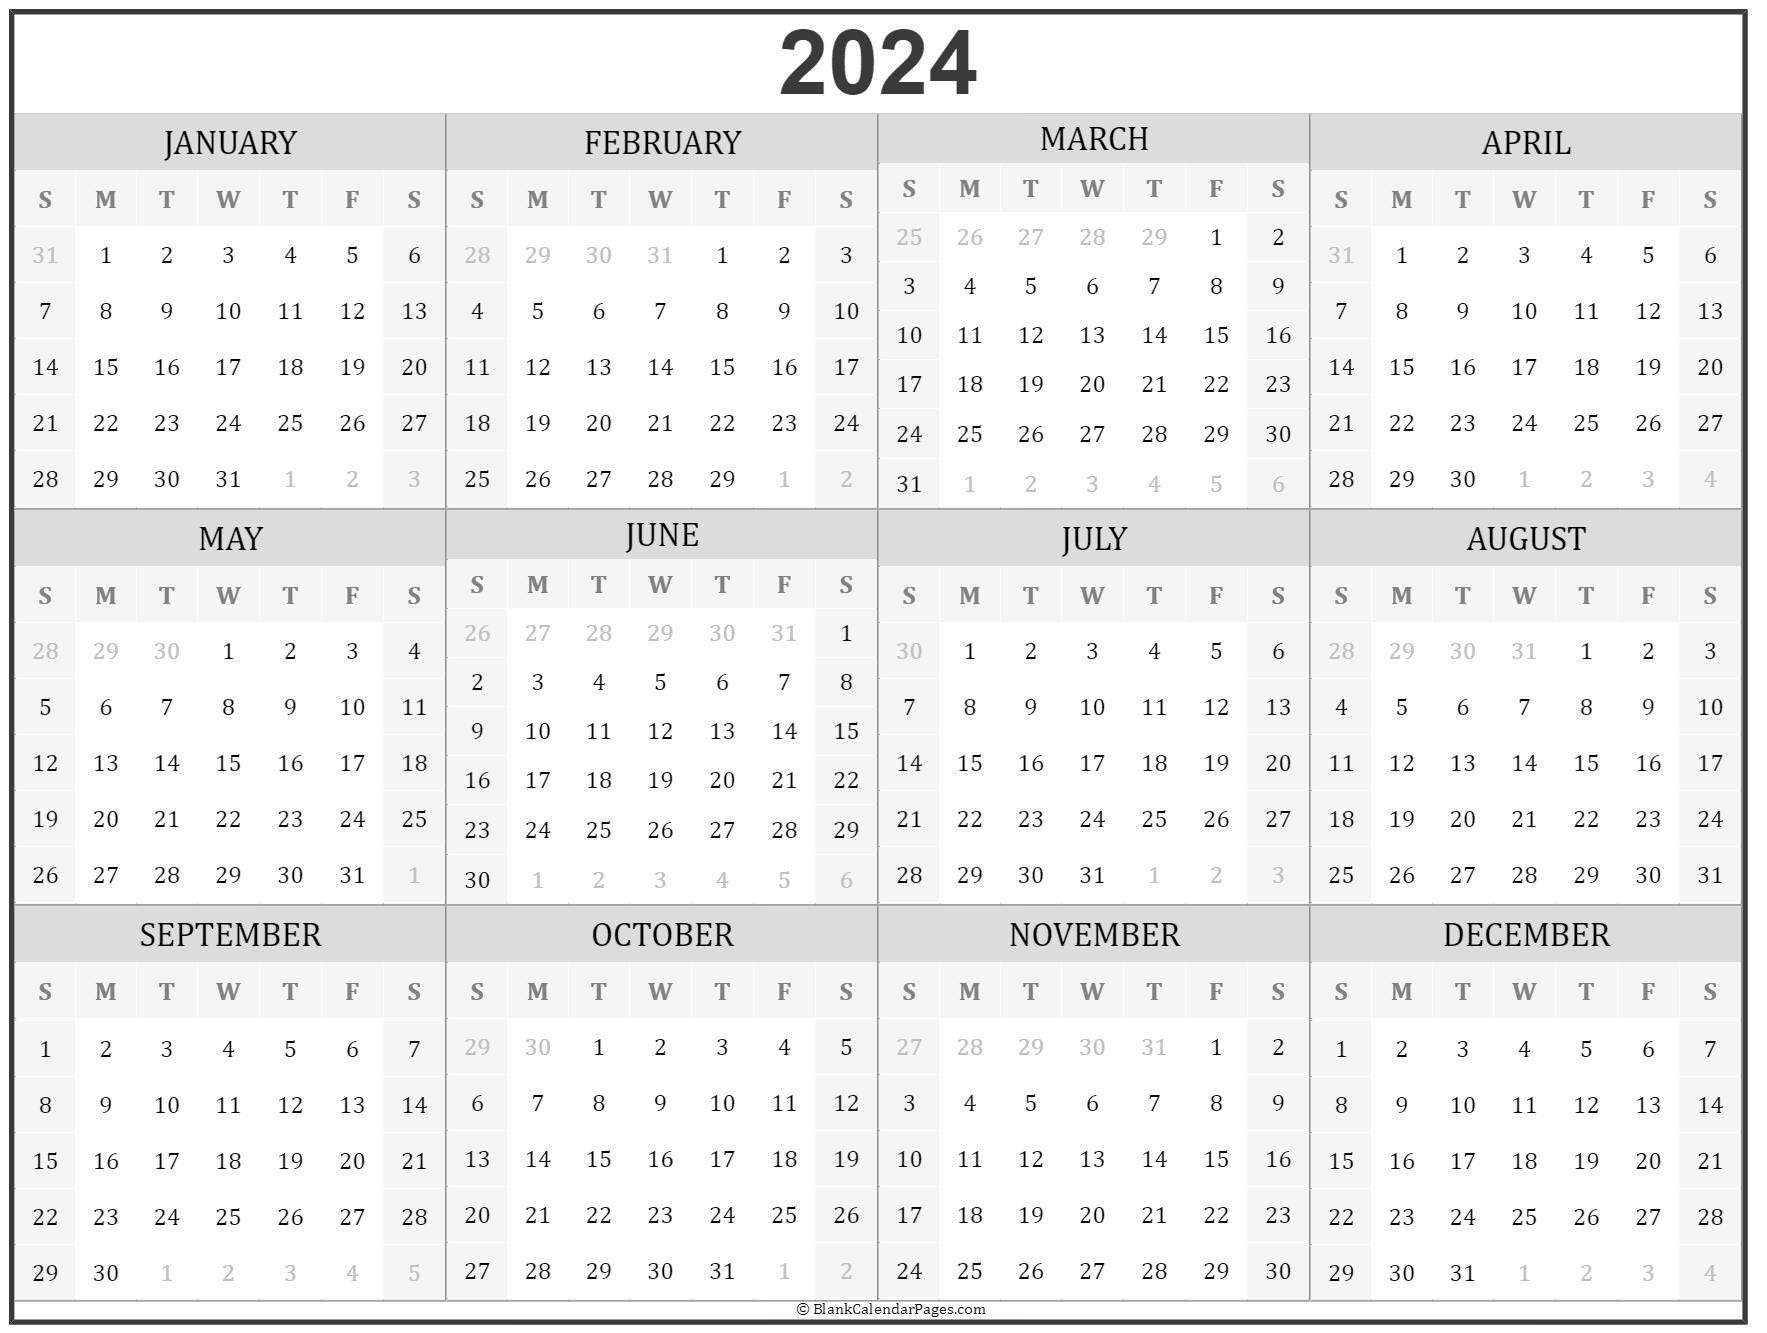 Pitt Calendar 2024 2024 Calendar Printable